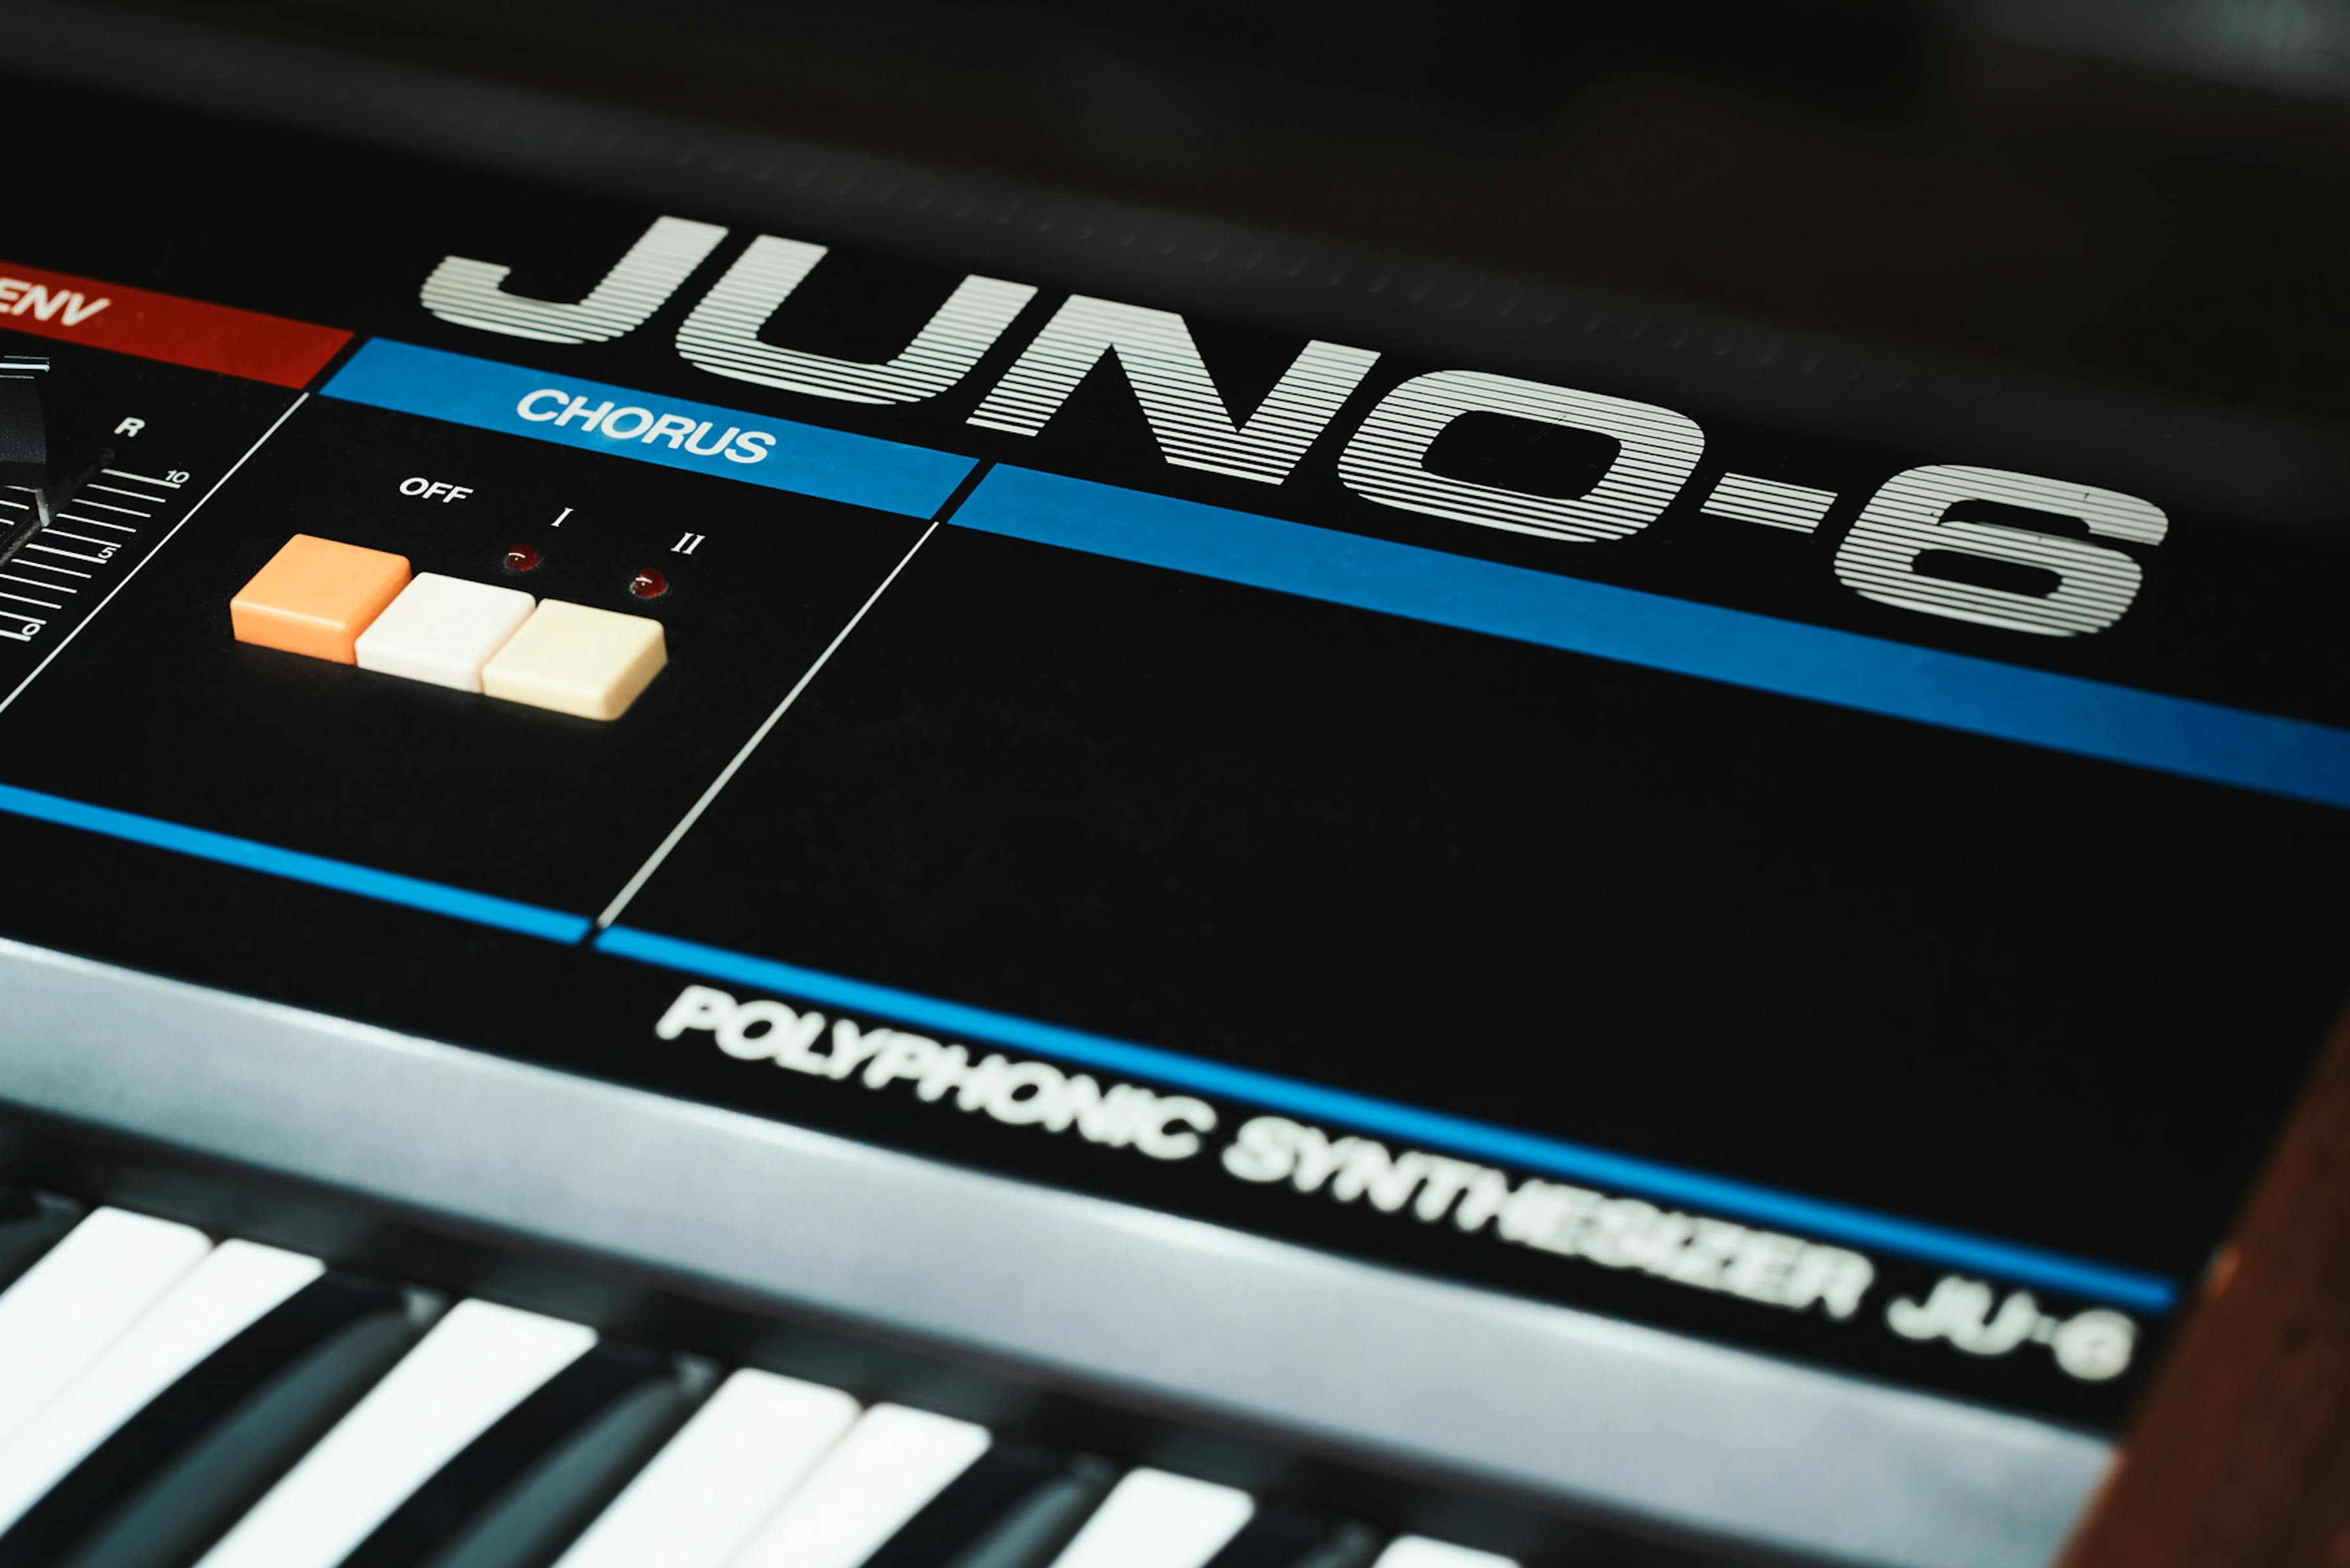 Juno keyboard